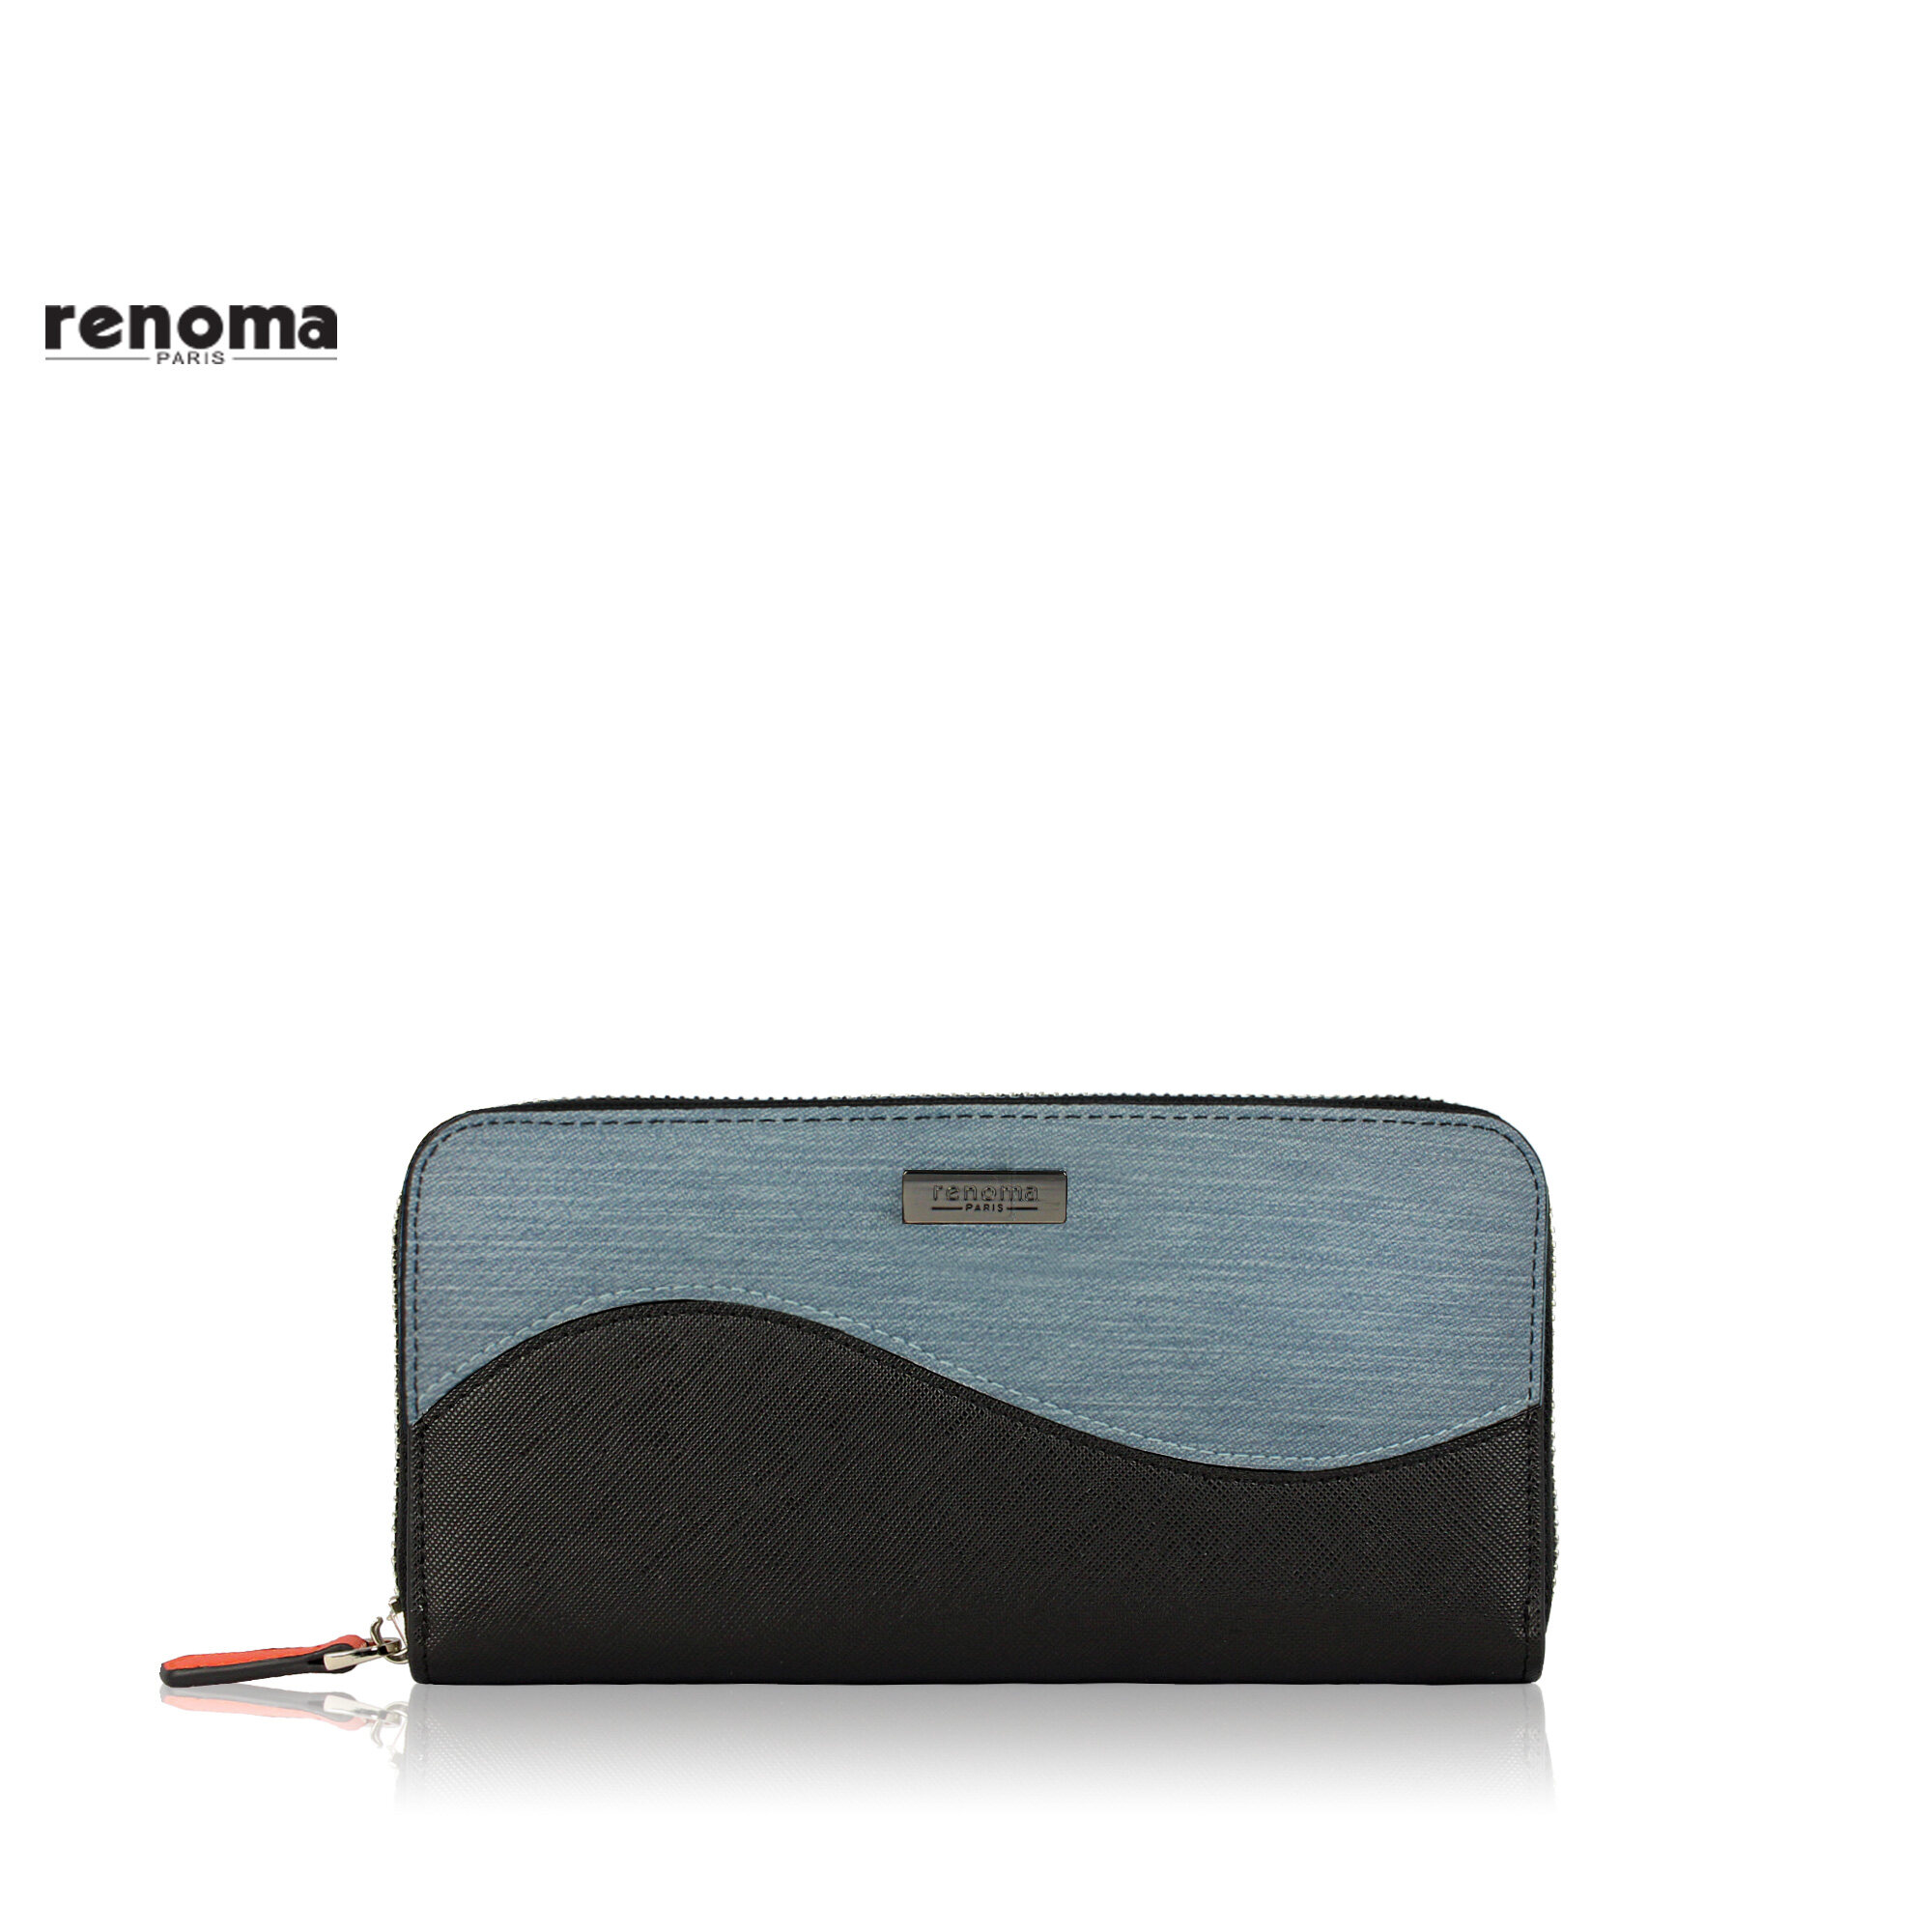 ❤️GIFTED❤️Preloved branded Renoma Paris Shoulder bag | Shopee Philippines